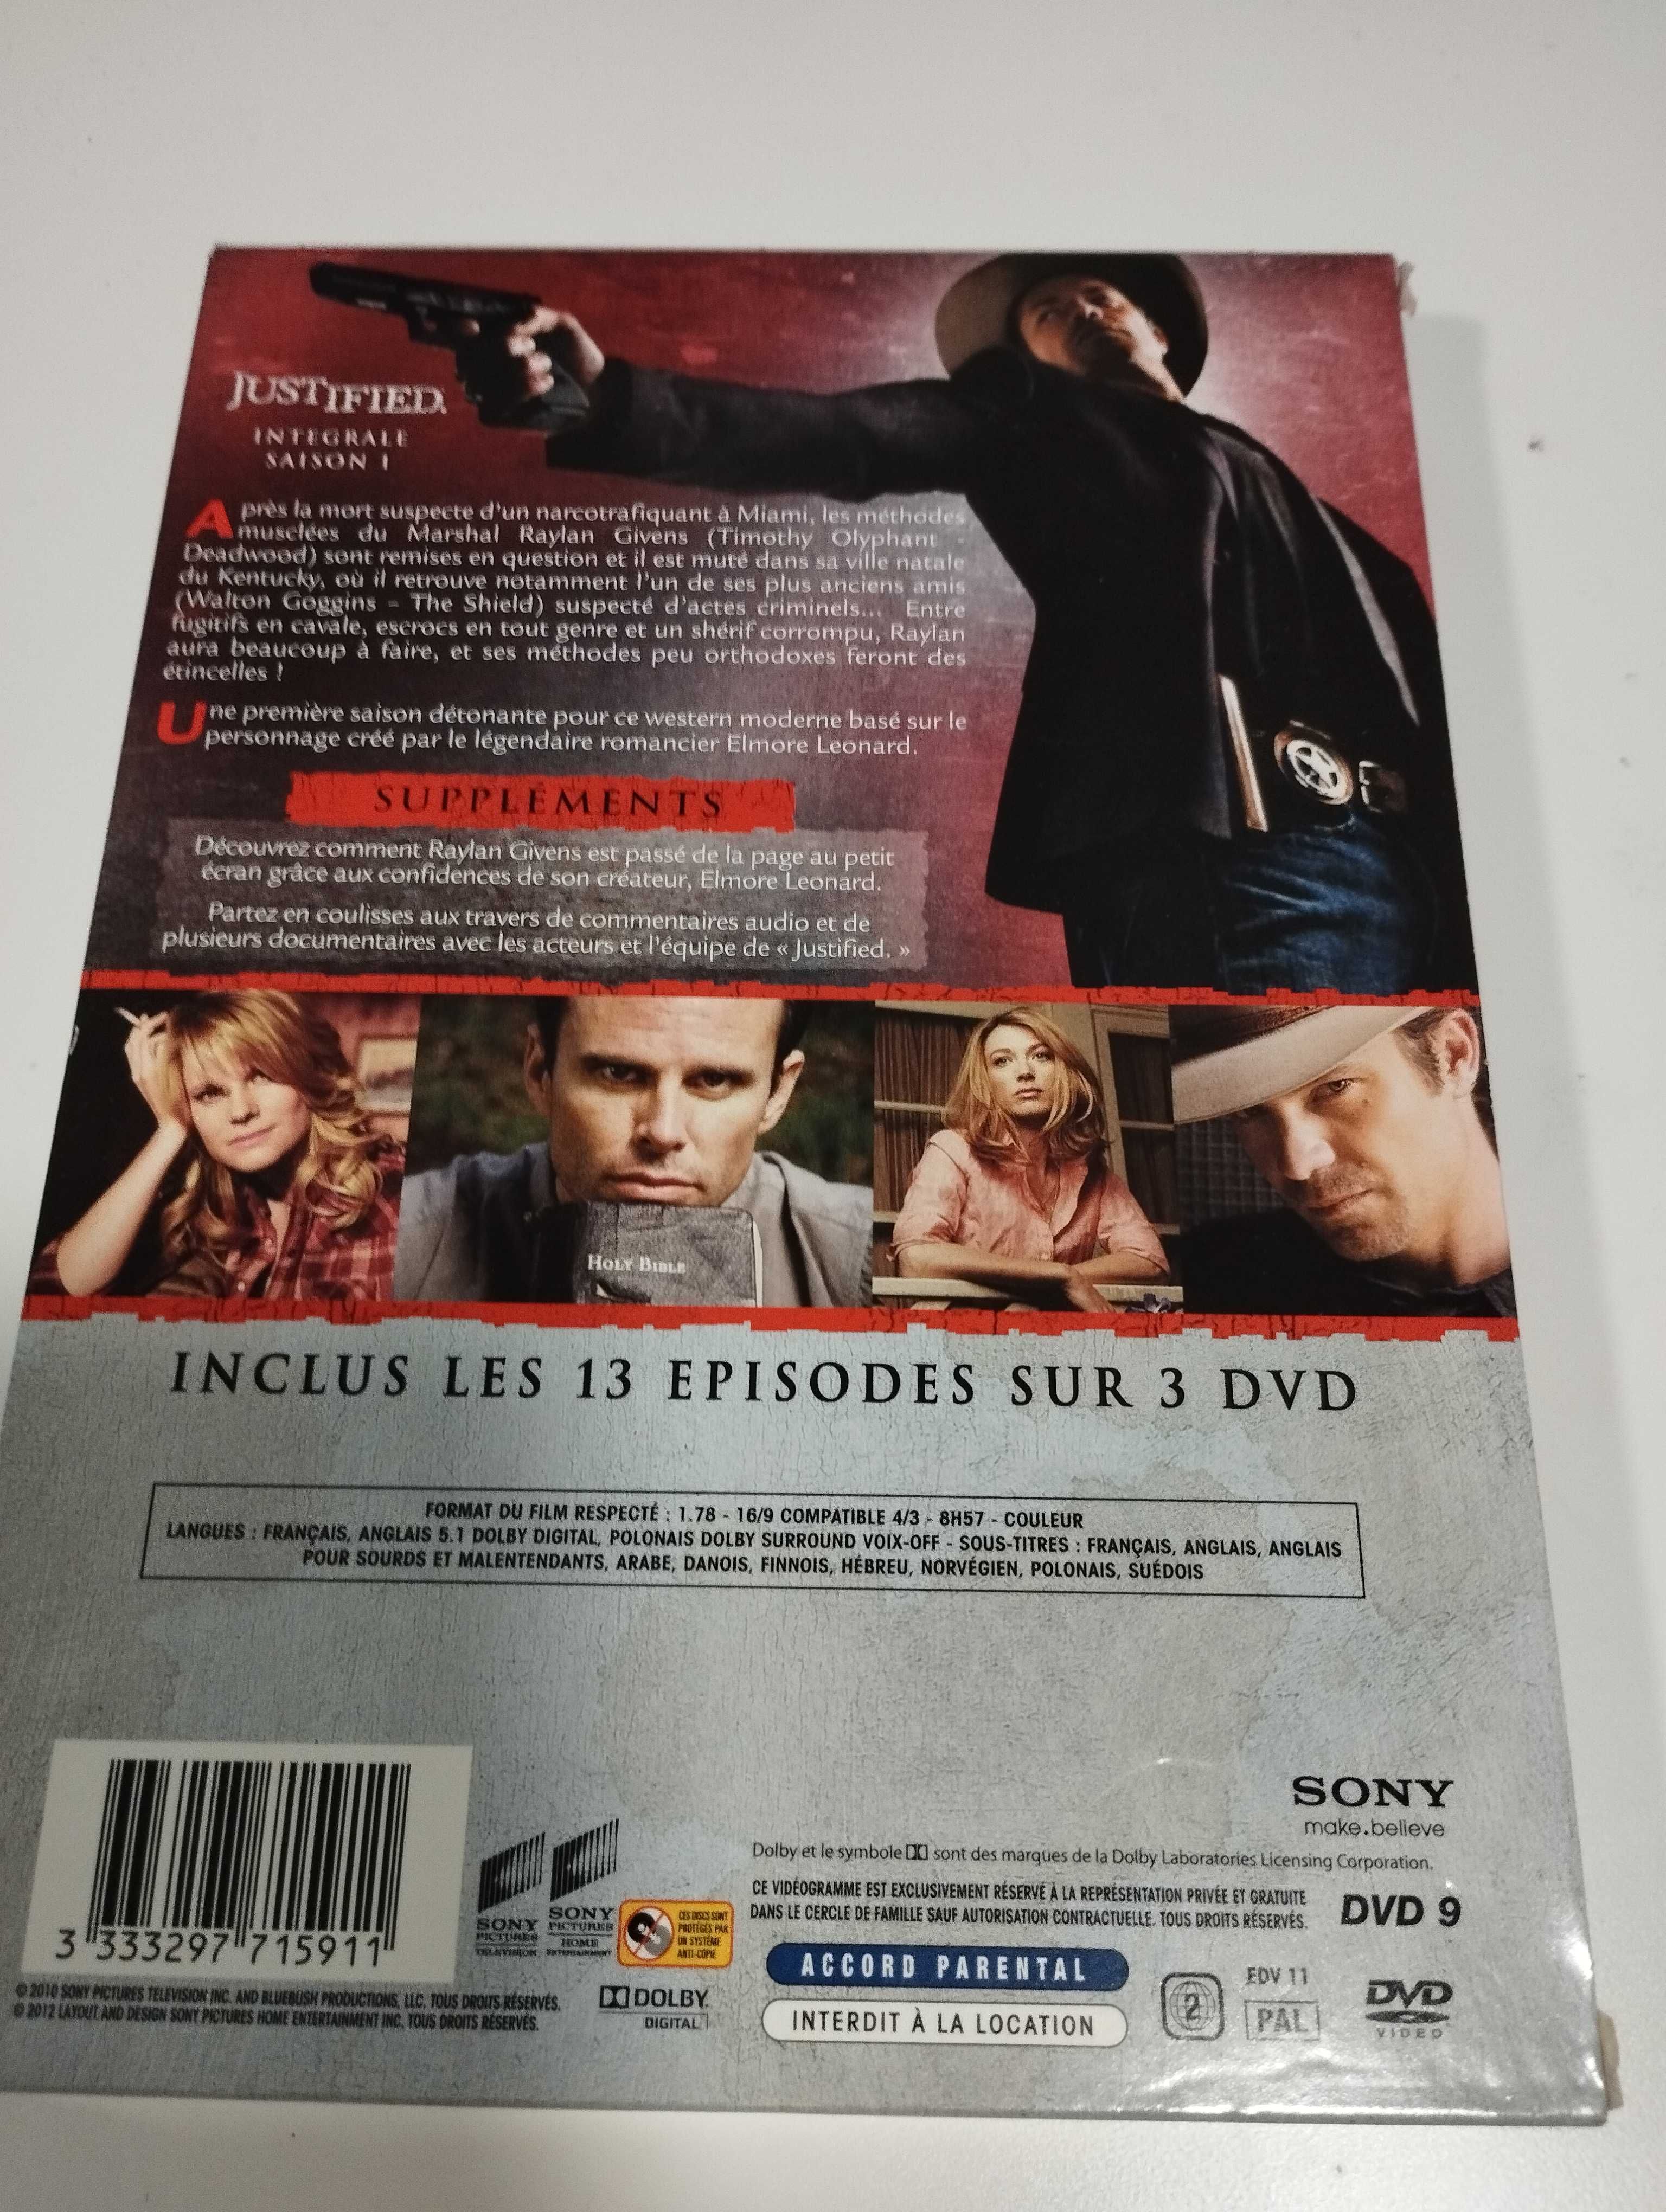 Justified - Season 1 DVD